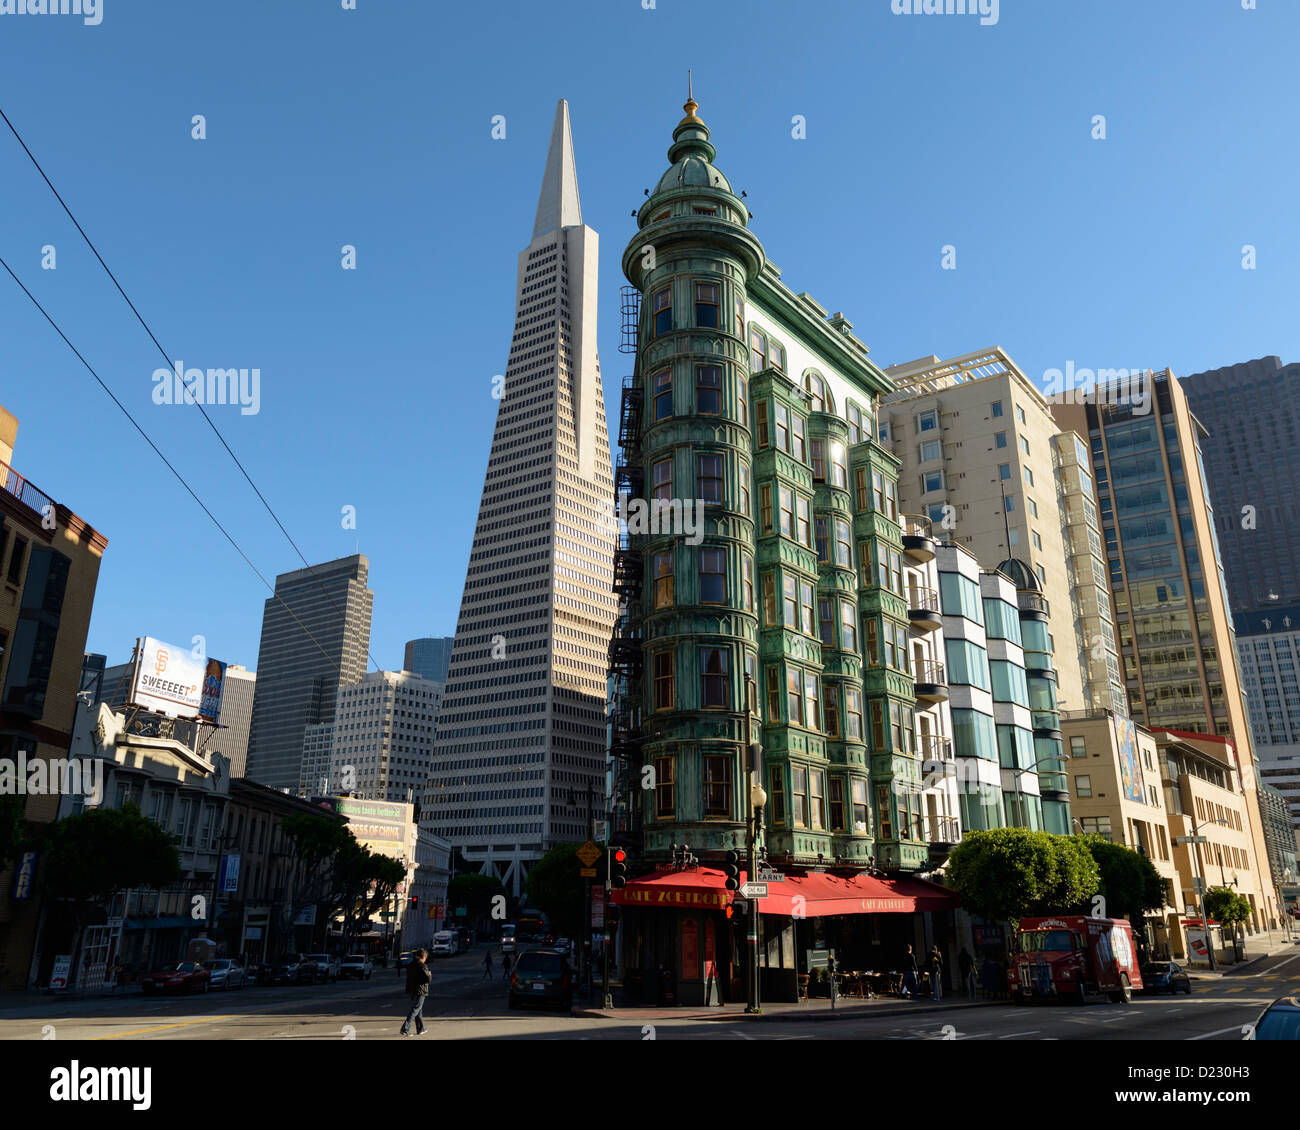 Sentinel Building with Transamerica Pyramid, Kearny Street, San Francisco Stock Photo